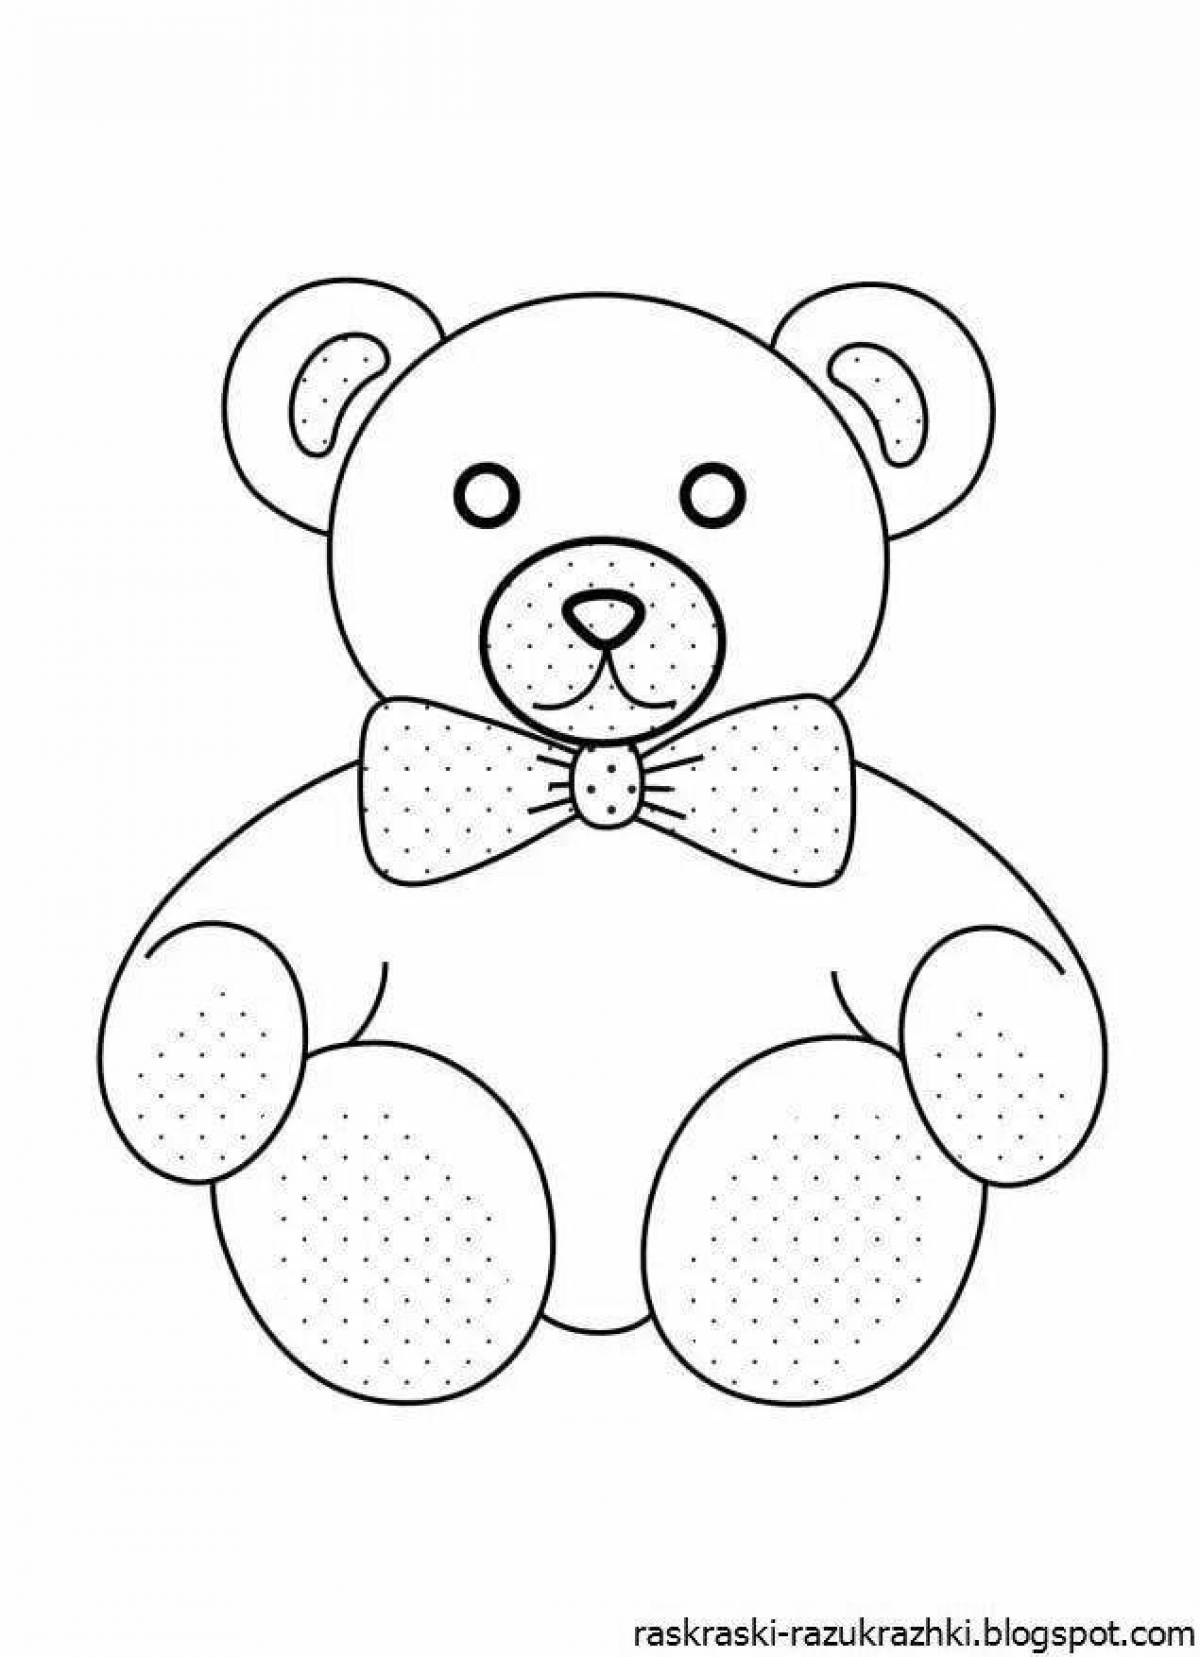 Joking drawing of a teddy bear